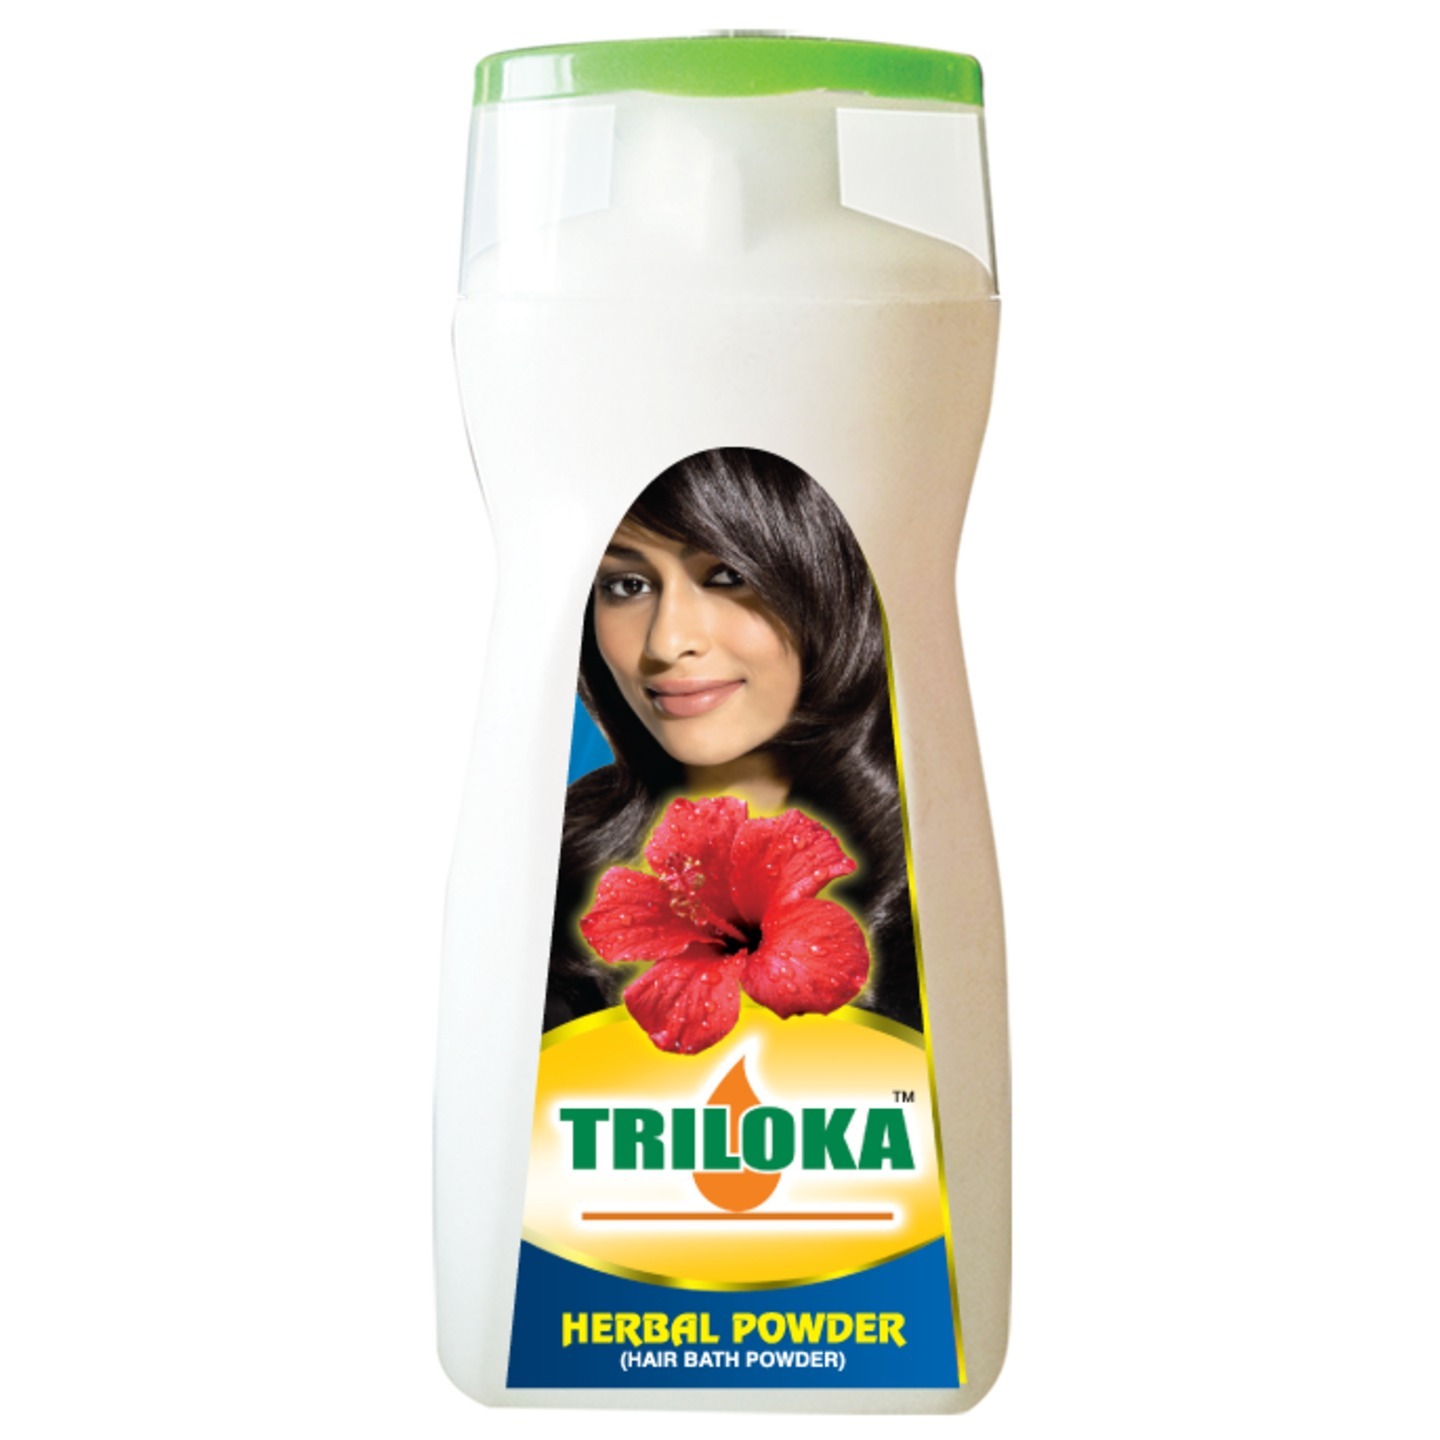 New Triloka Herbal / Mandara Head Bathing Powder Bottle ( Shampoo Powder) - 1 Case